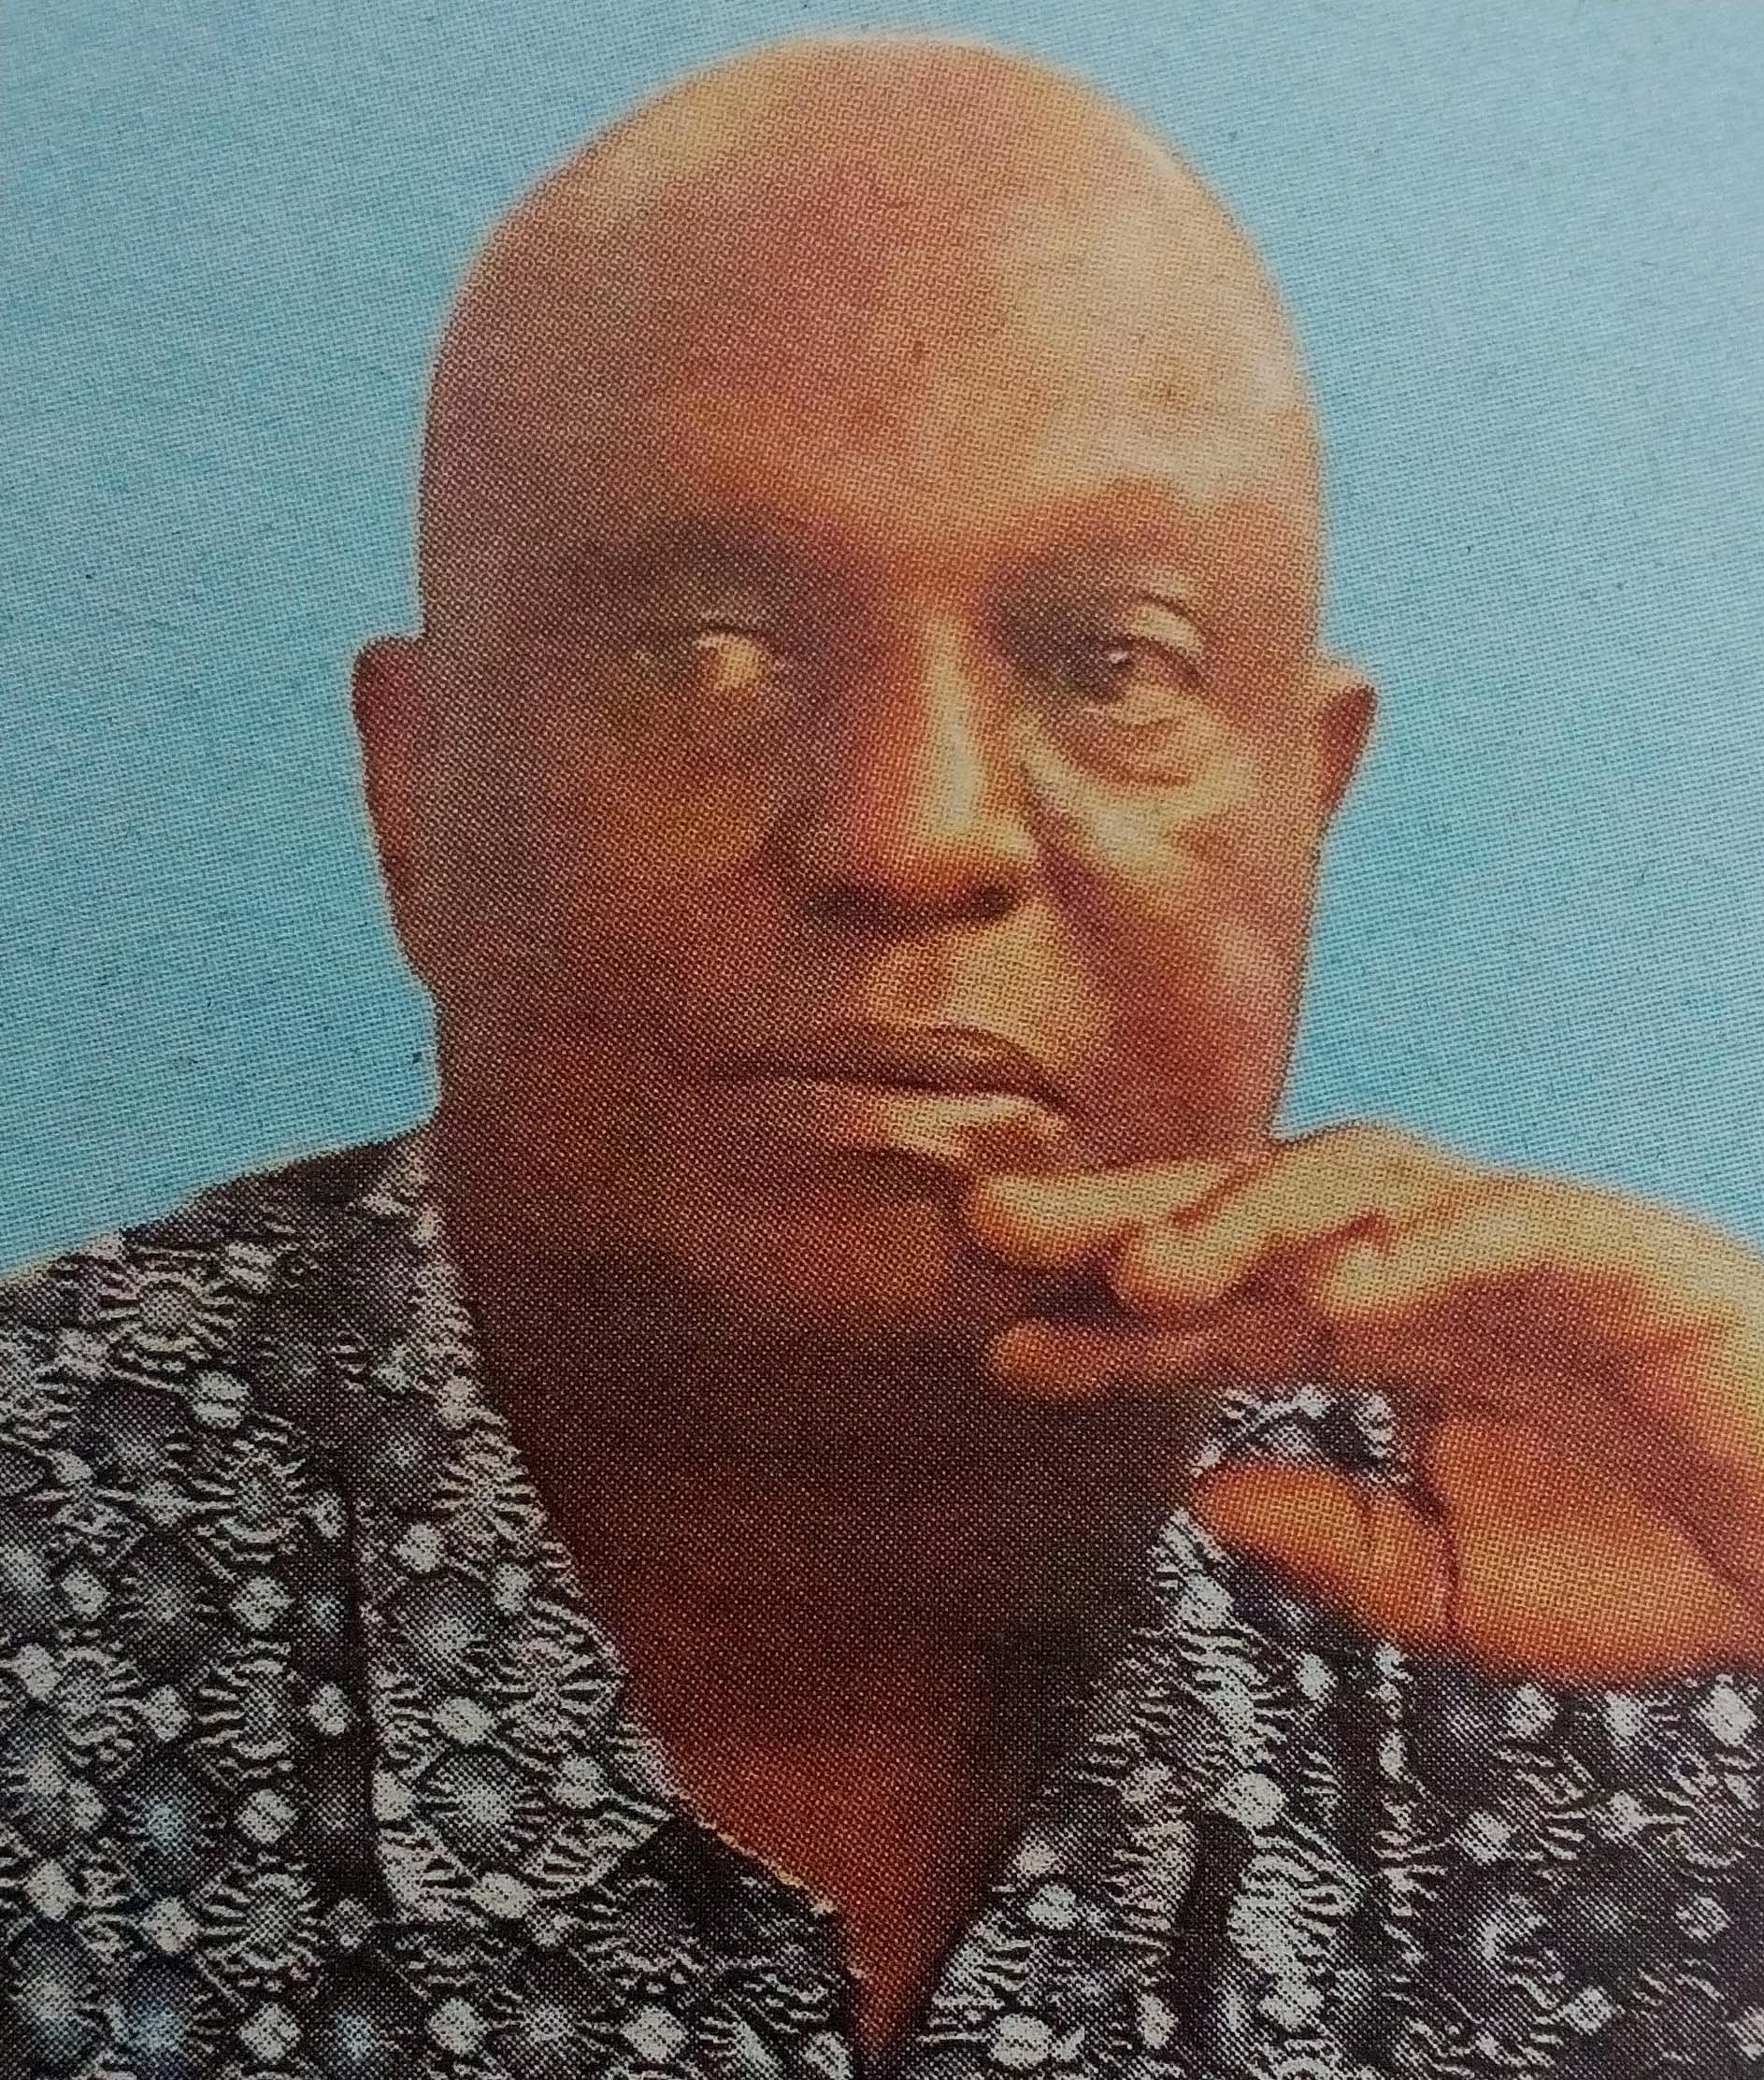 Obituary Image of Samson Gitonga Alexander Muthamia